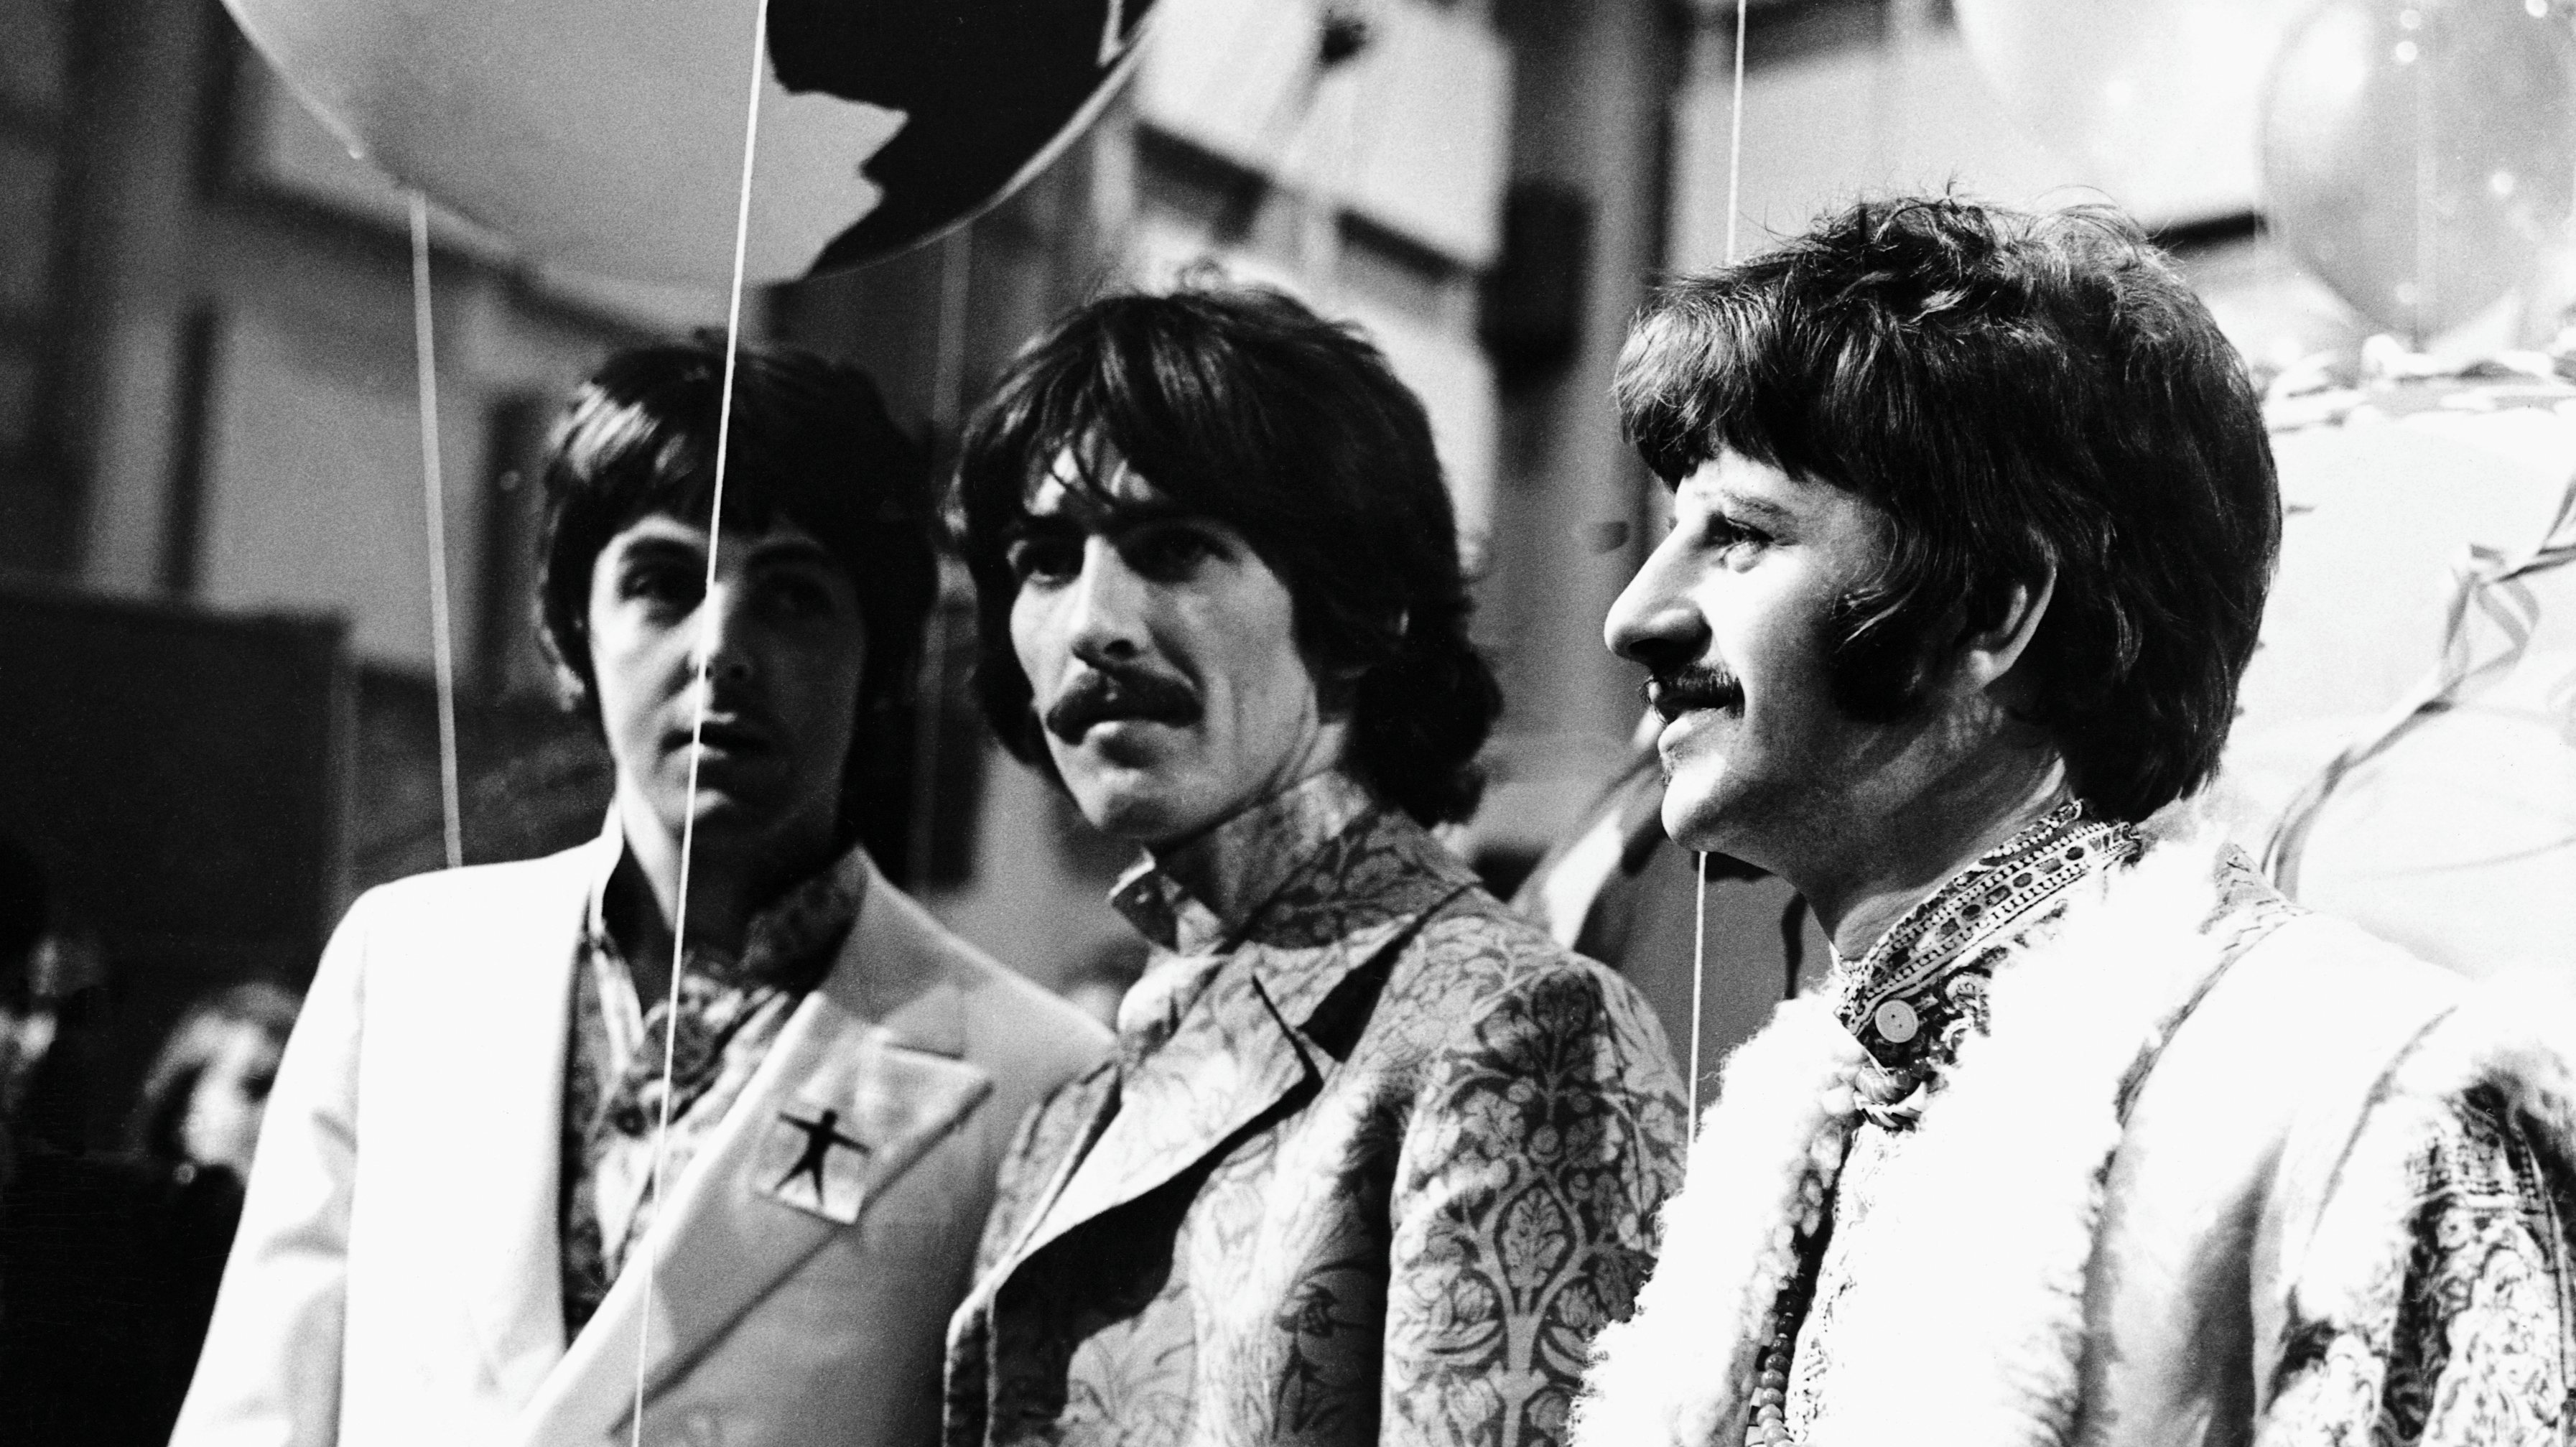 Paul McCartney, George Harrison and Ringo Starr